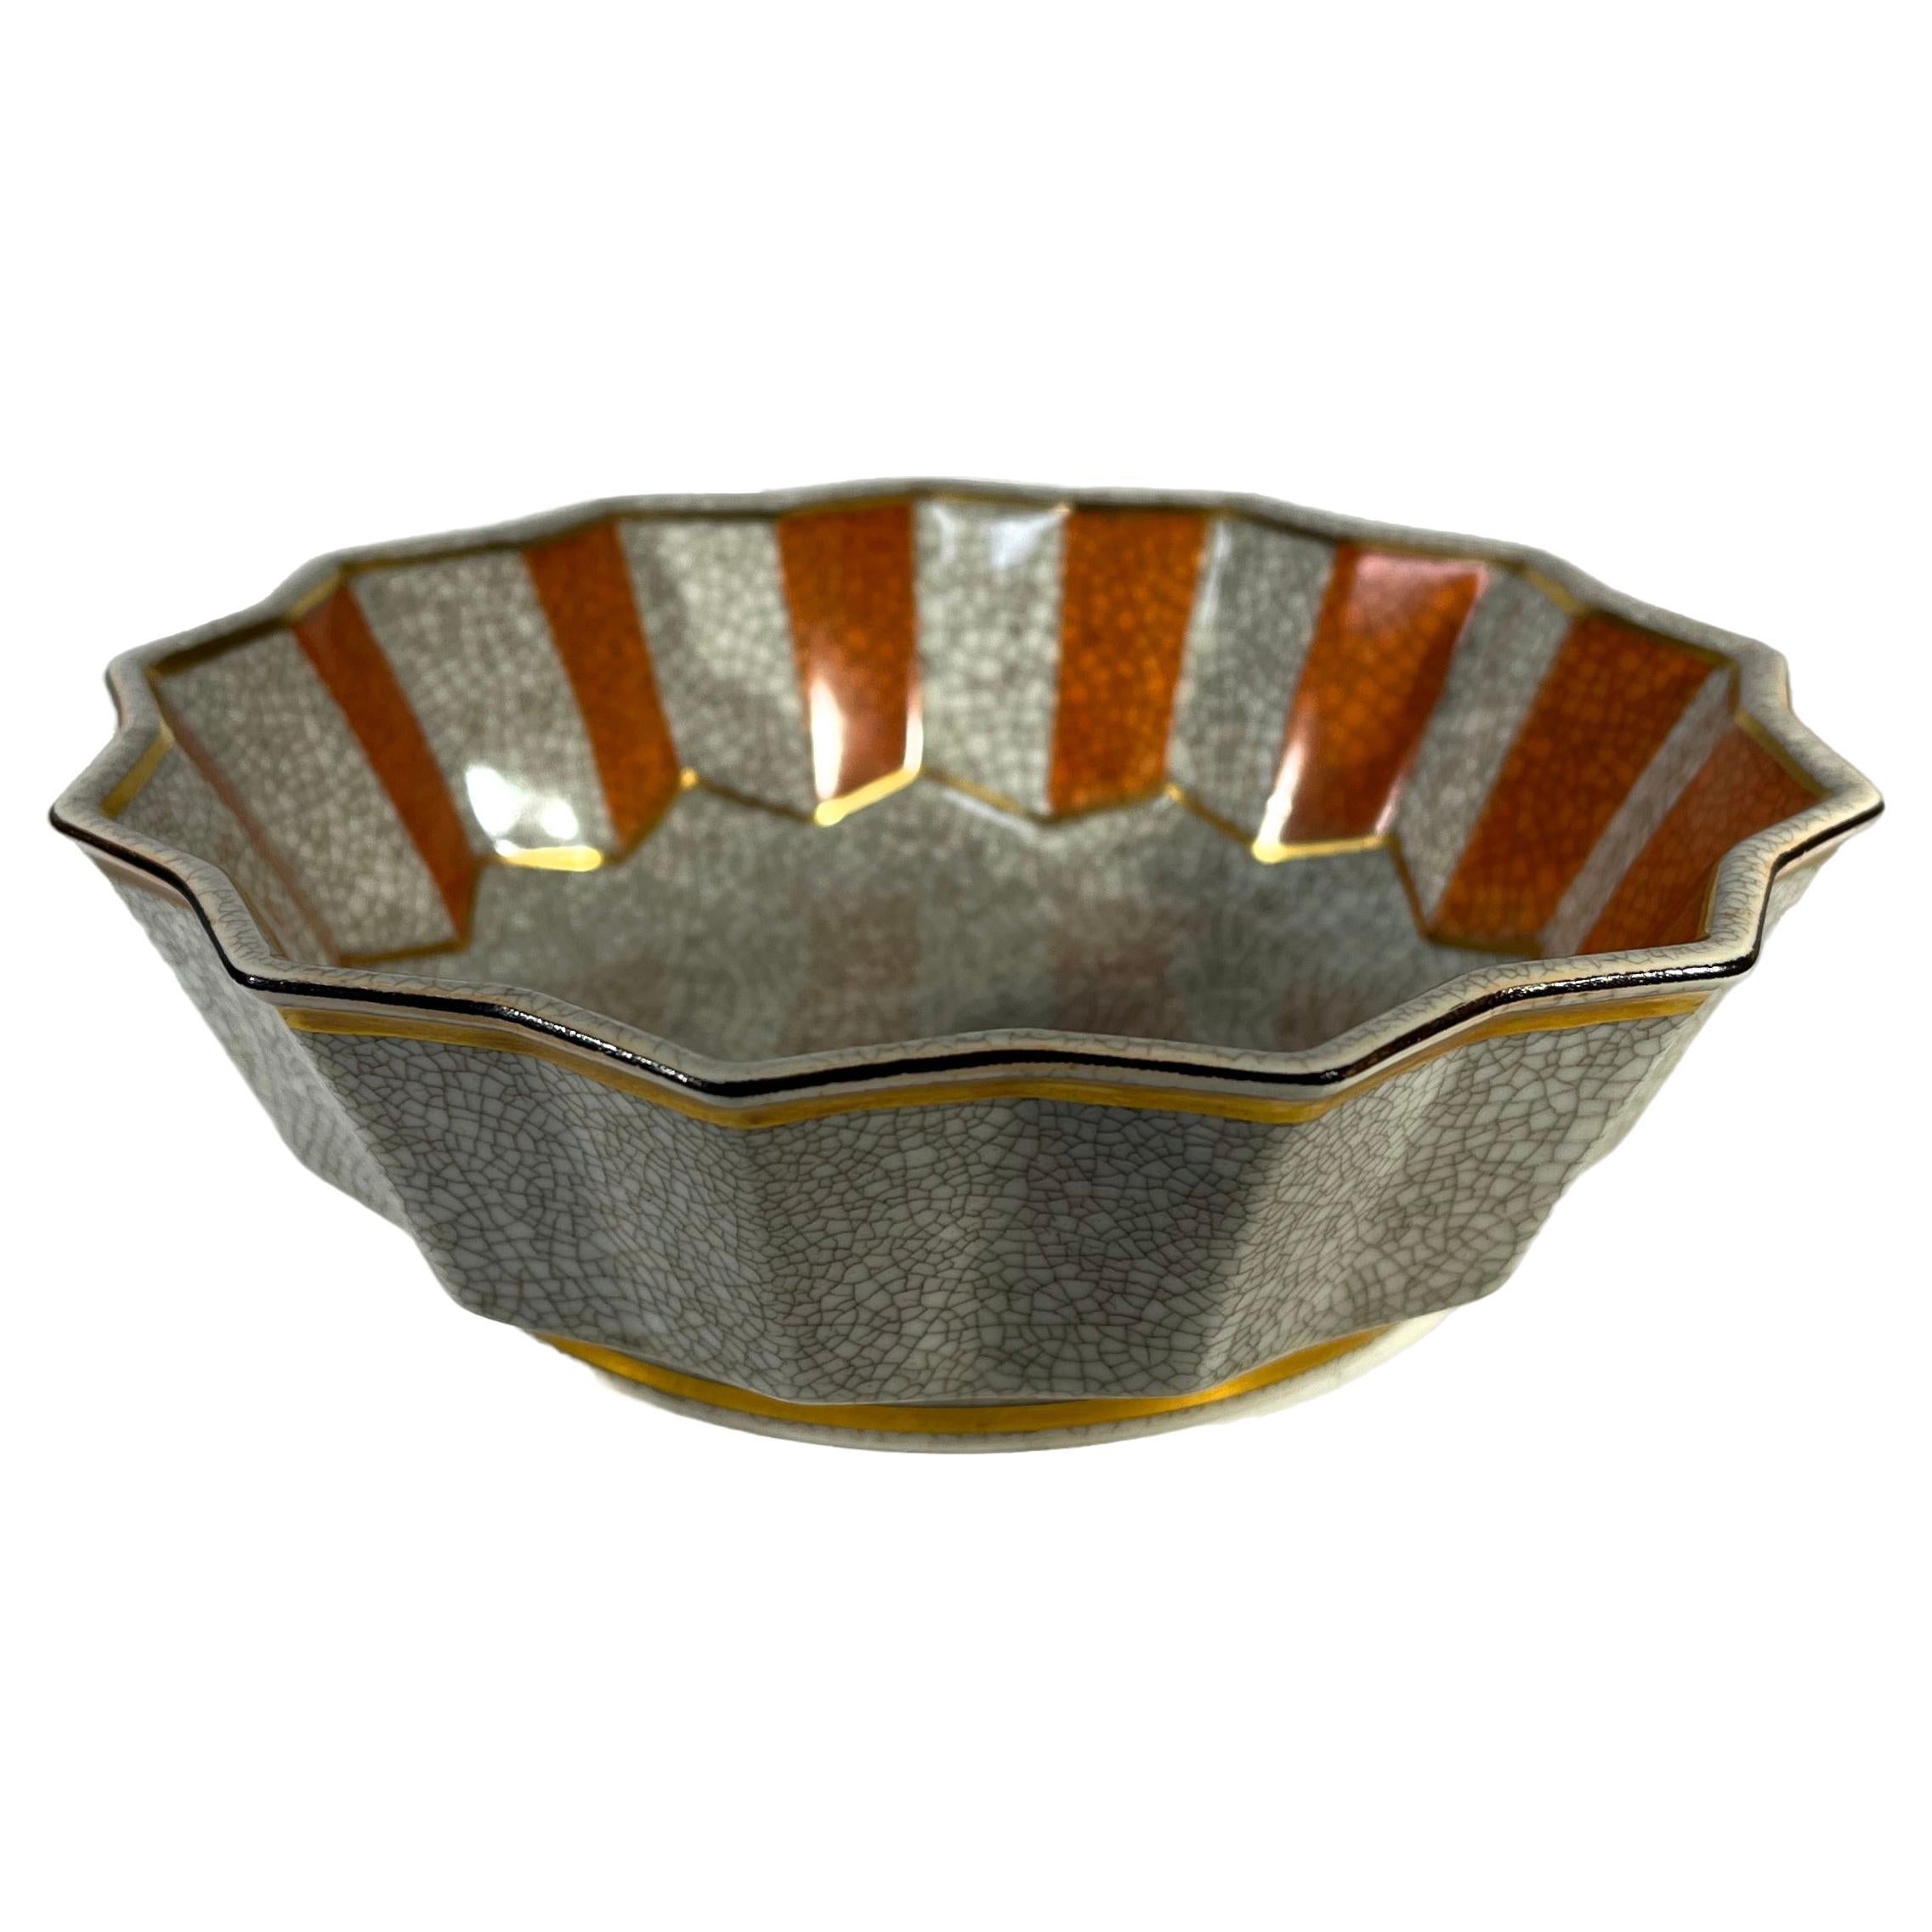 Thorkild Olsen, Royal Copenhagen 1953 Terracotta Grey Crackle Fluted Dish #3191